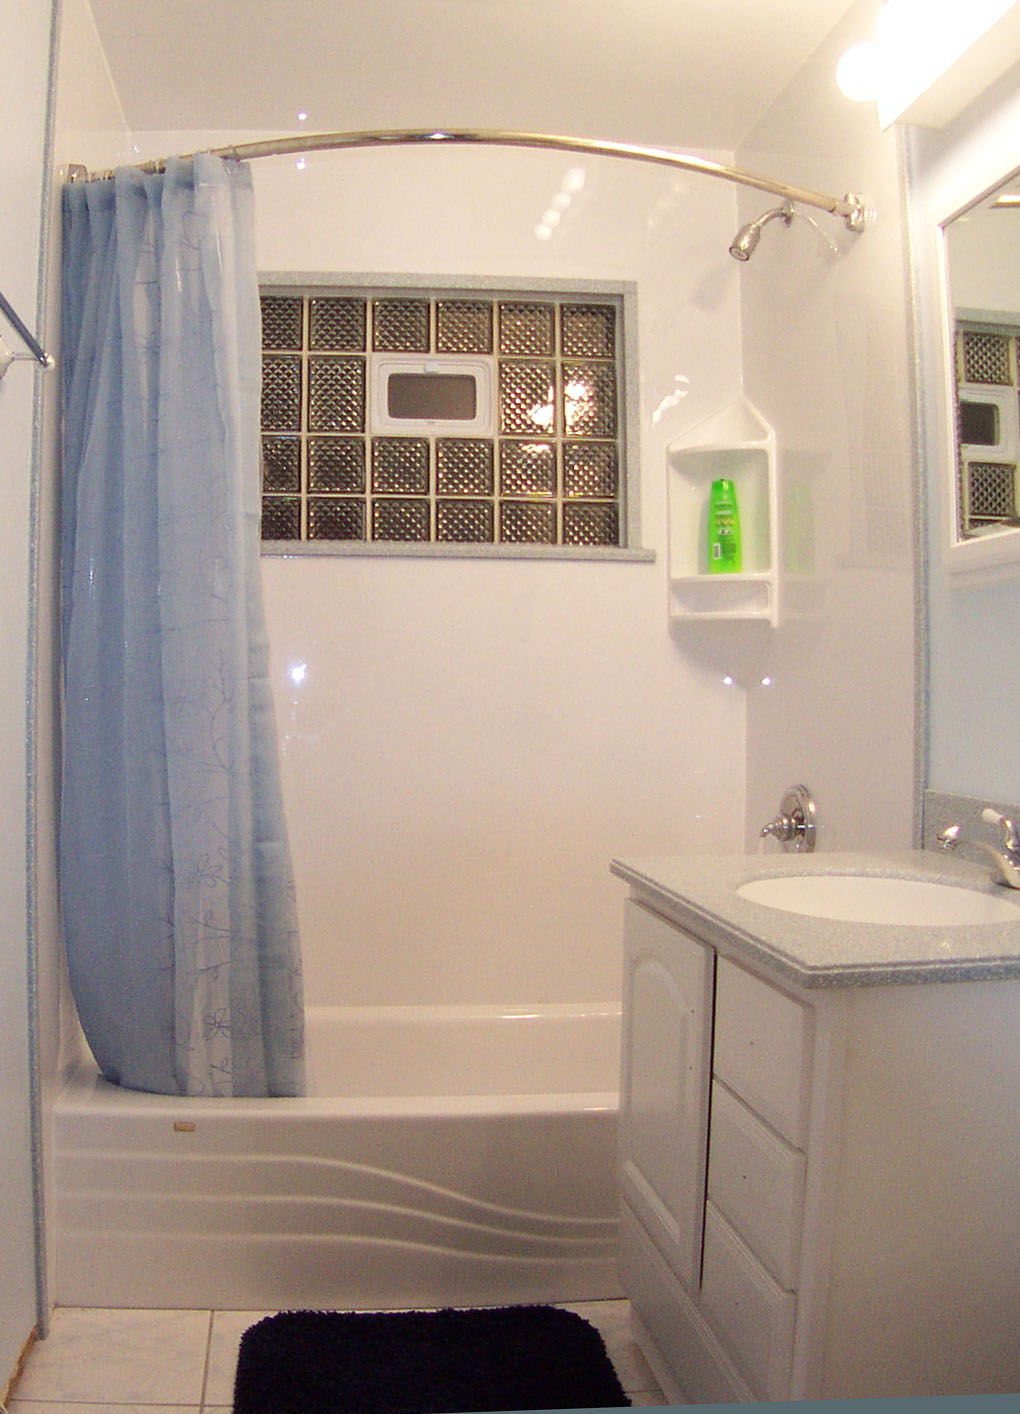 bathroom space bathtub curtain interior efficient stylish articles category read